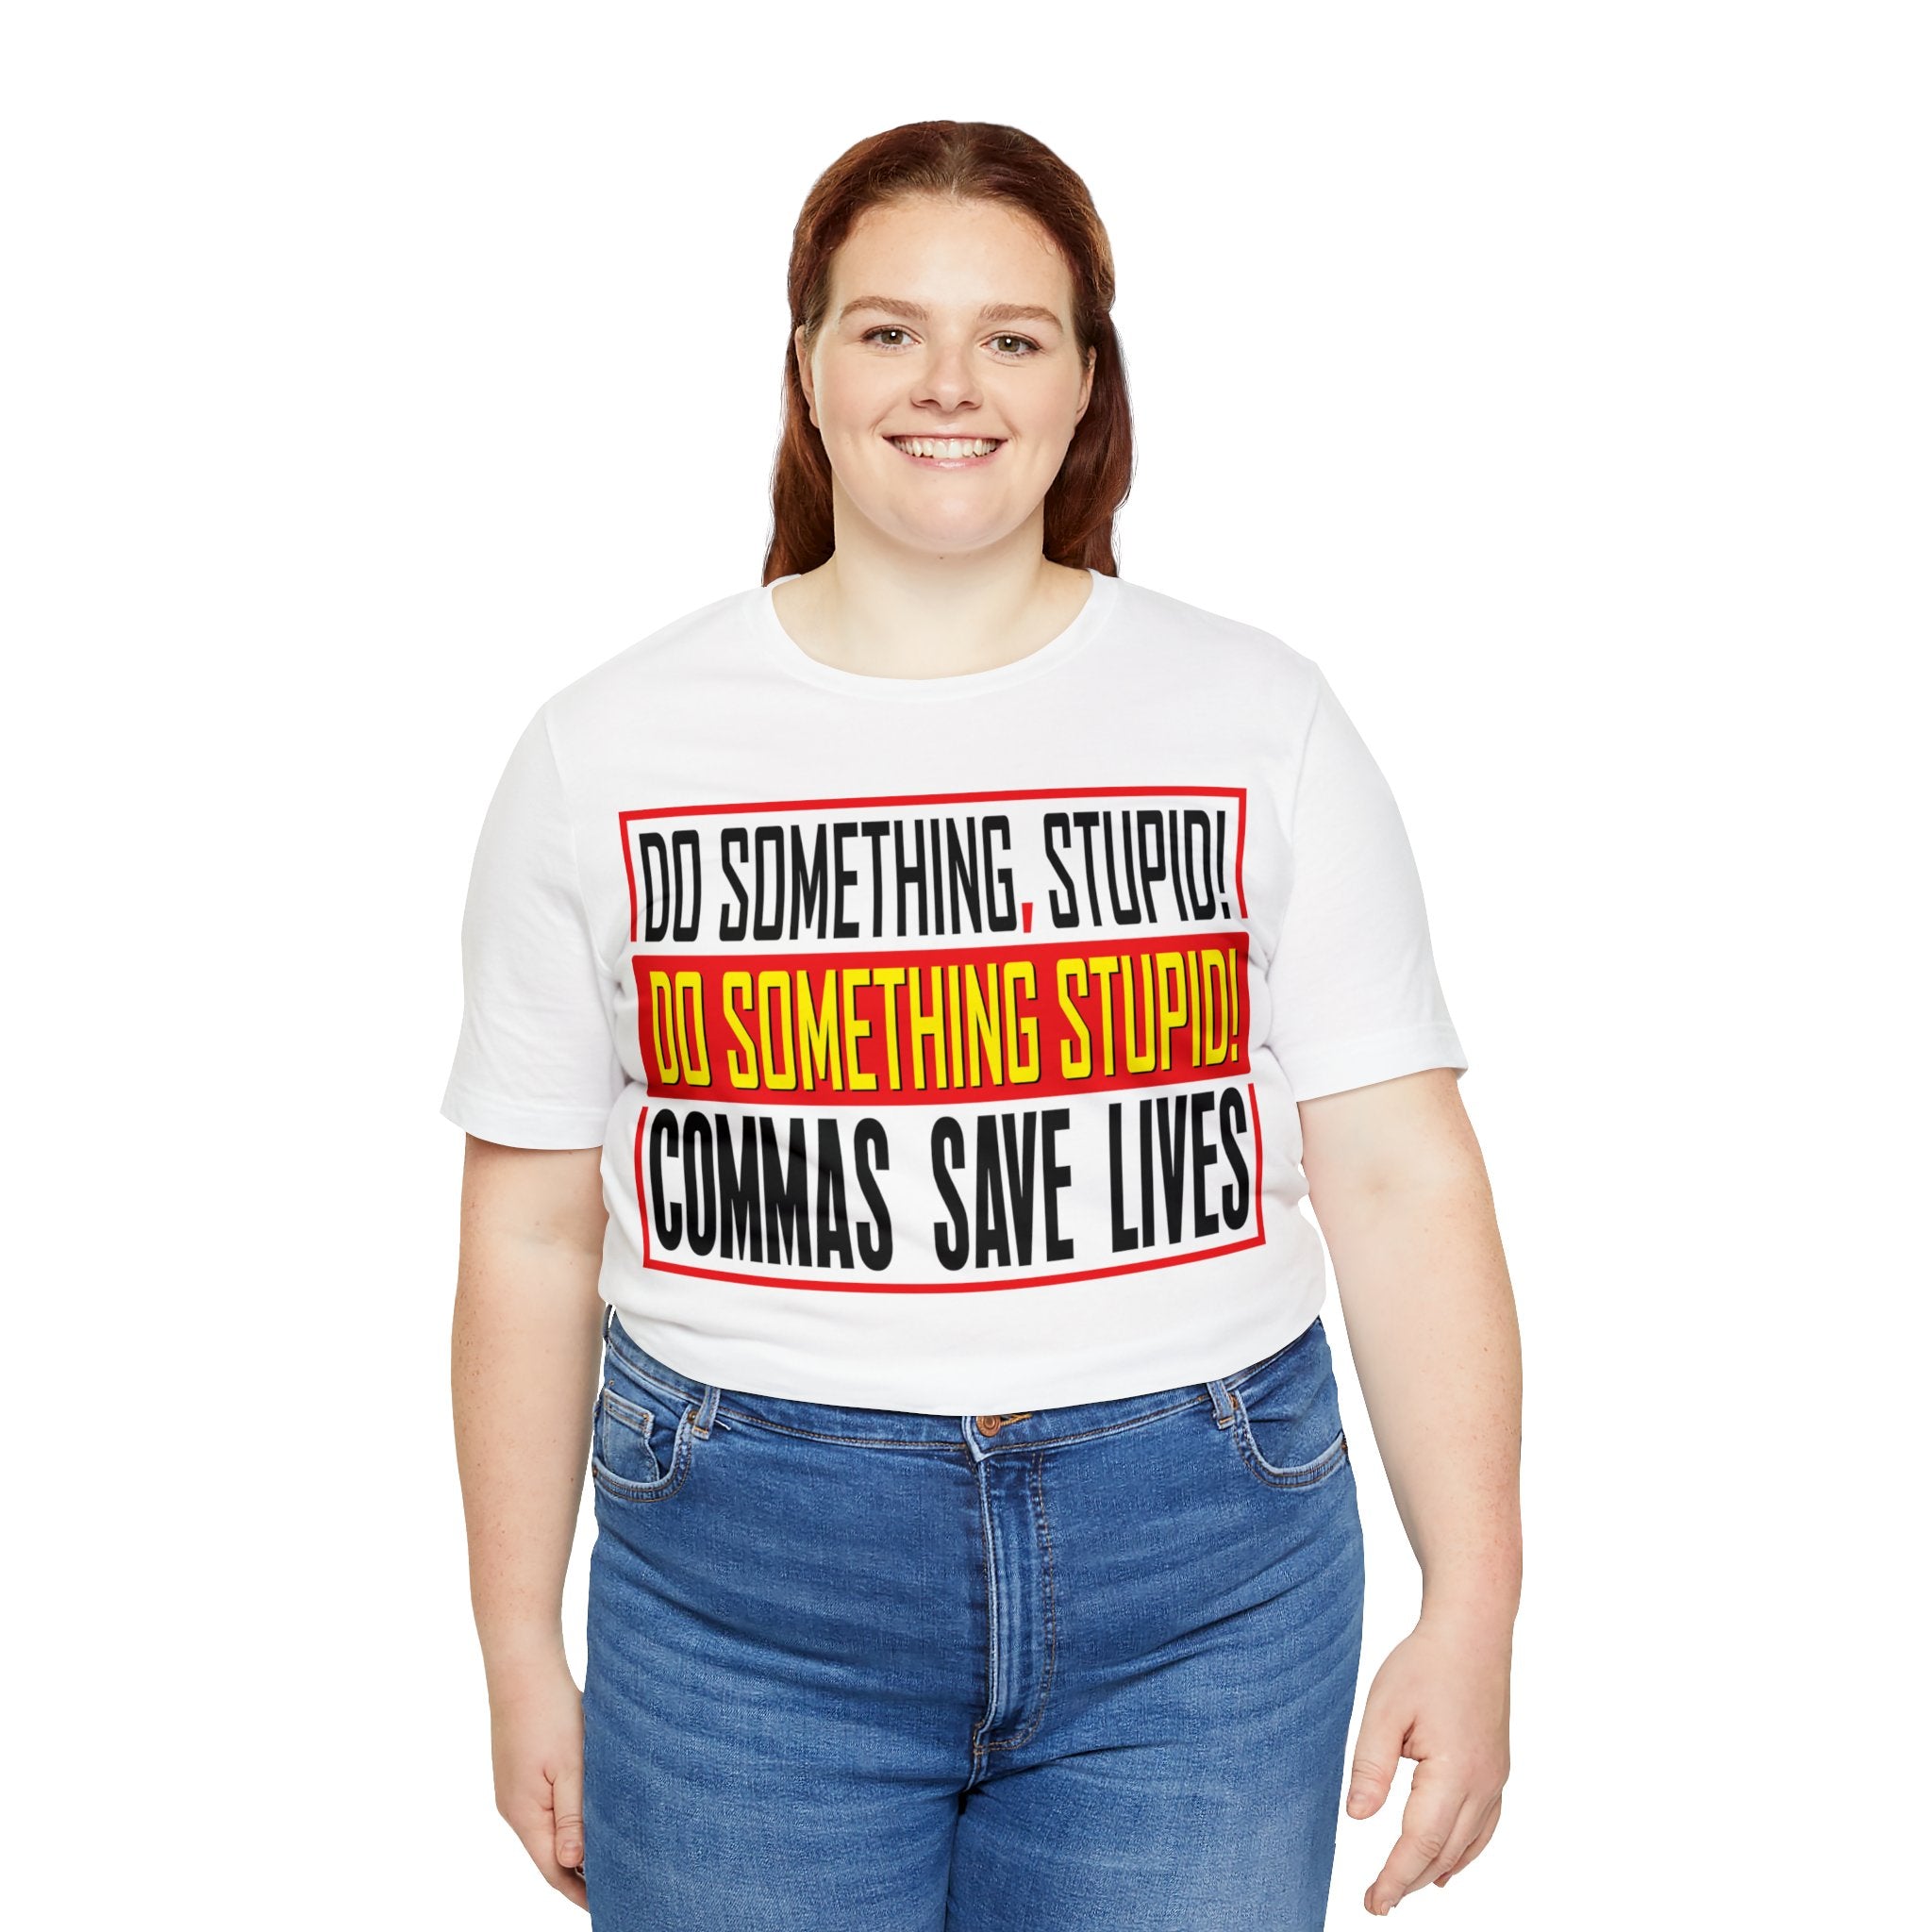 Commas Save Lives - Stupid